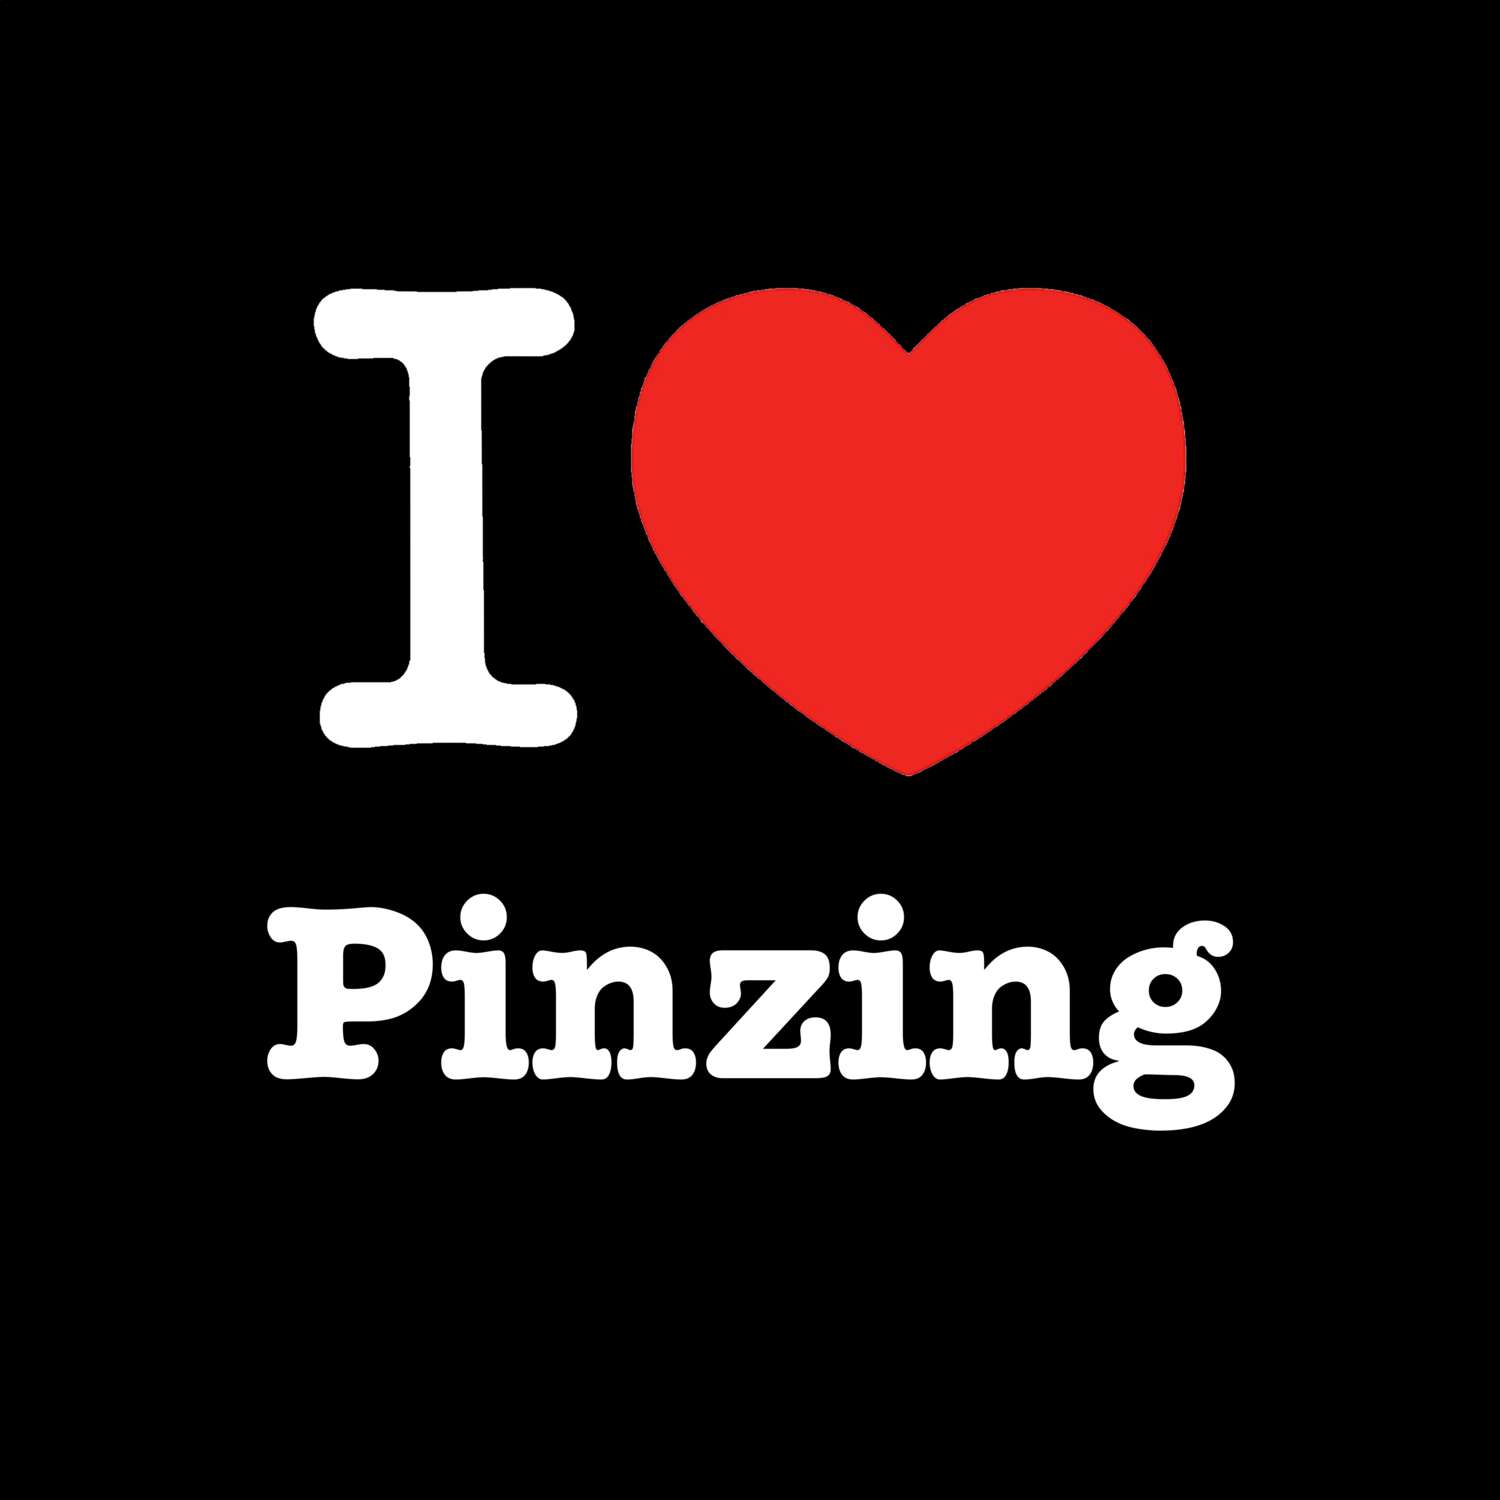 Pinzing T-Shirt »I love«